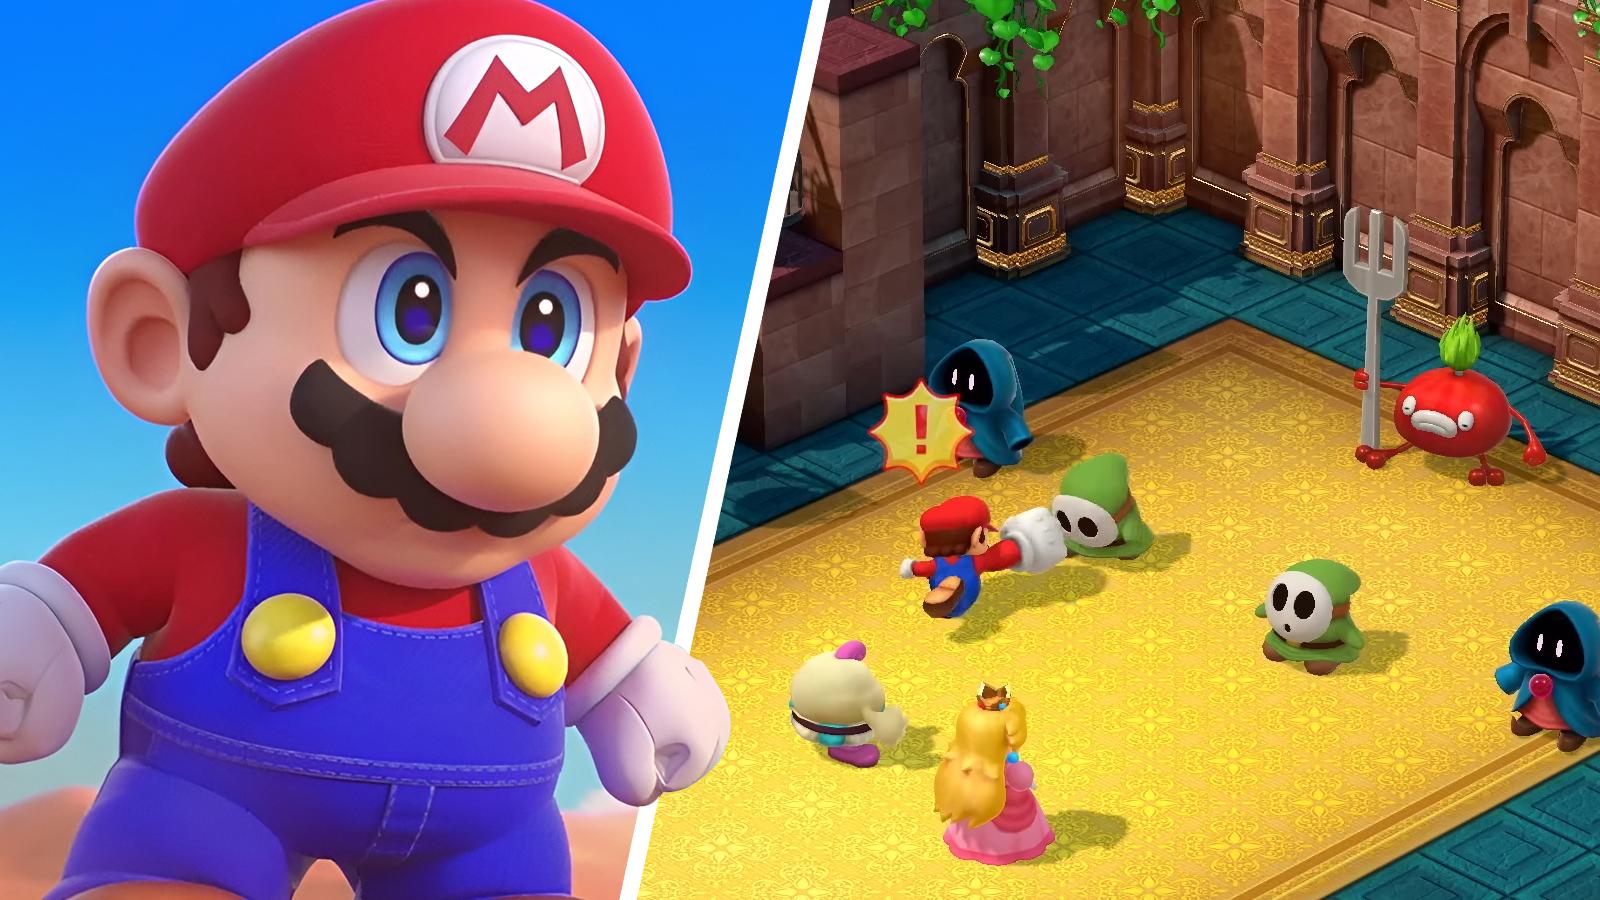 Super Mario RPG – Launch Trailer – Nintendo Switch 